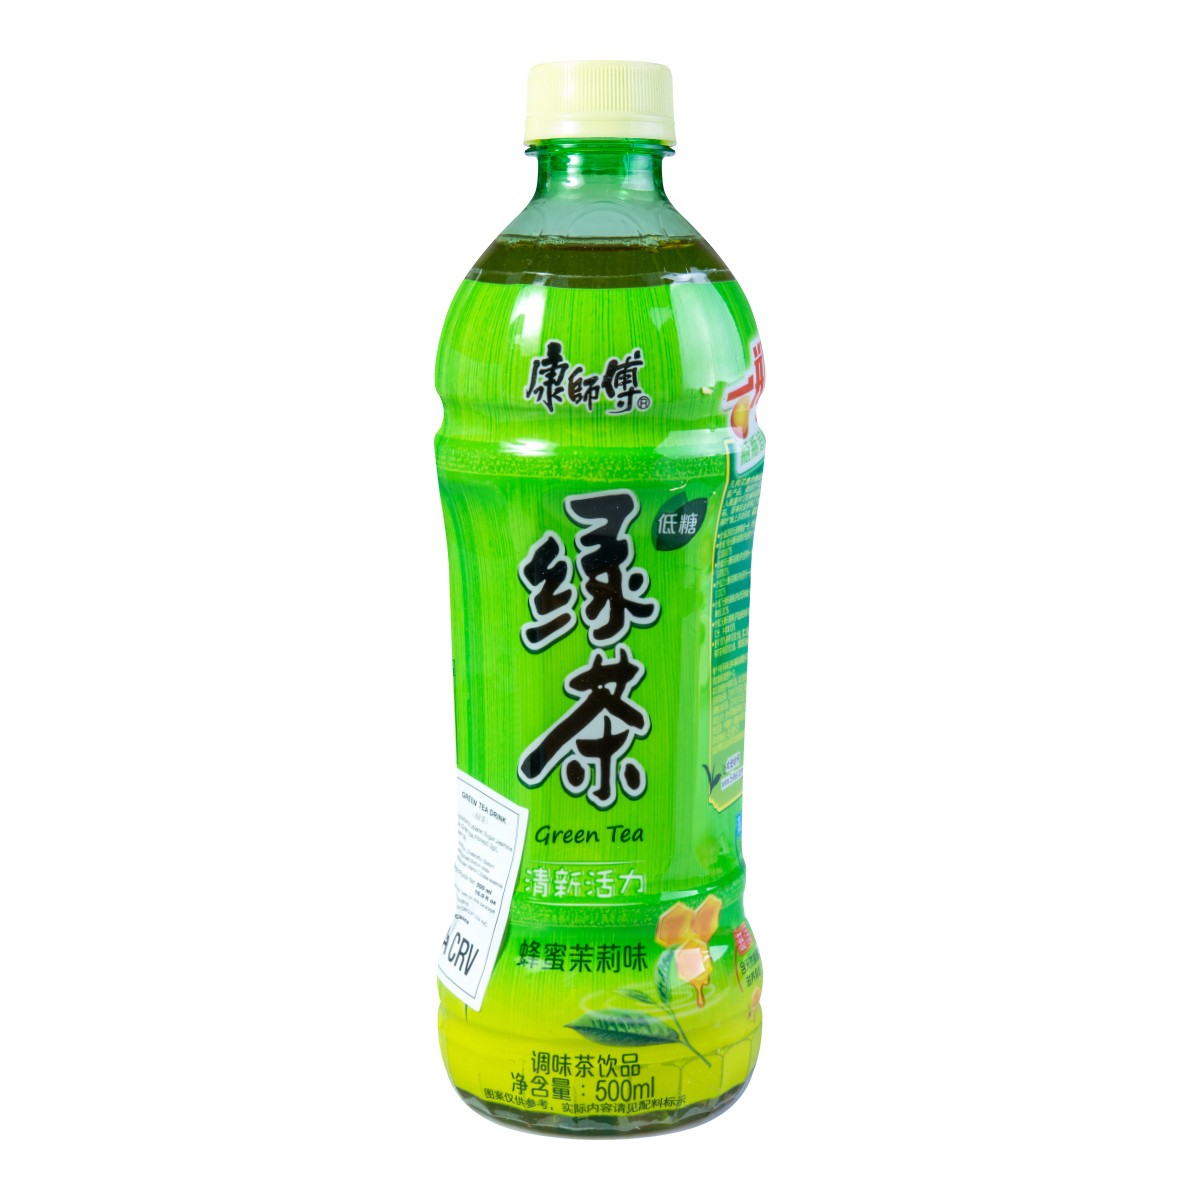 Master Kong Green Tea(康师傅绿茶)